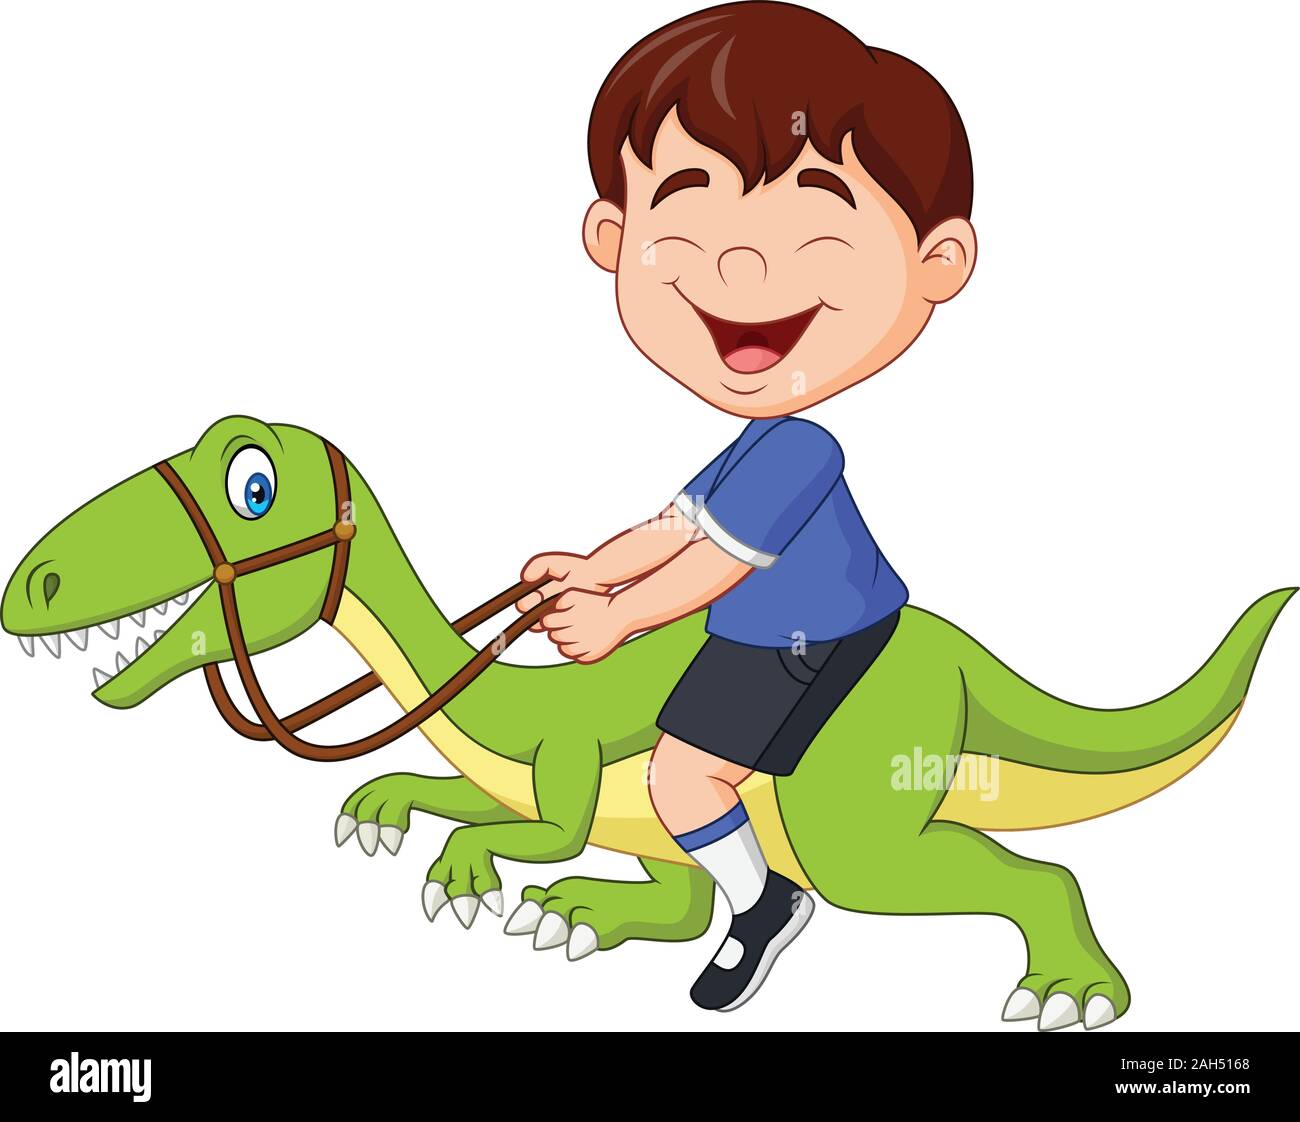 Jump Illustration Vector PNG Images, Jumping Live Wave Dinosaur  Illustration, Grey Dinosaur, Jumping Dinosaur, Cute Toy Dinosaur PNG Image  For Free Download